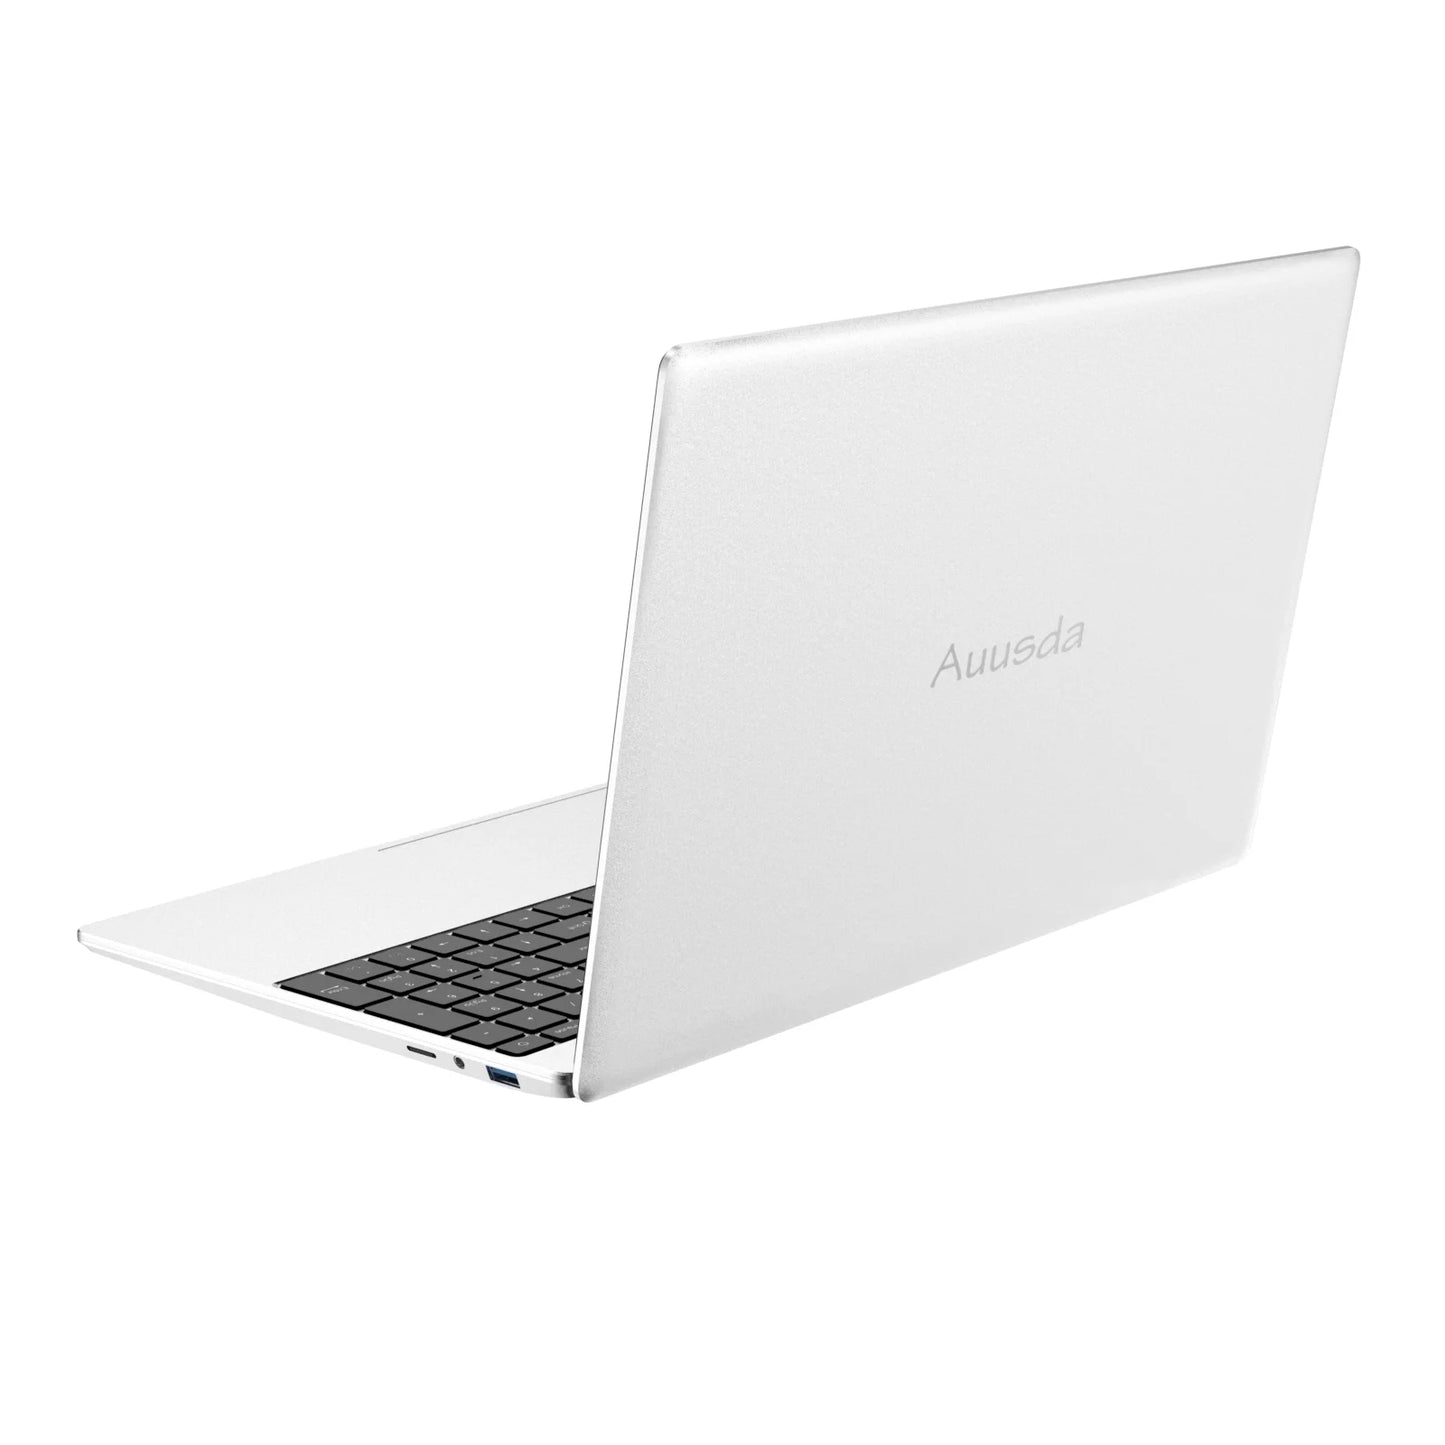 15.6" Laptop Intel Alder N95, 16GB RAM, 512GB SSD, Windows 11 Pro Work Computer, Fingerprint Reader, Backlit Keyboard, Silver